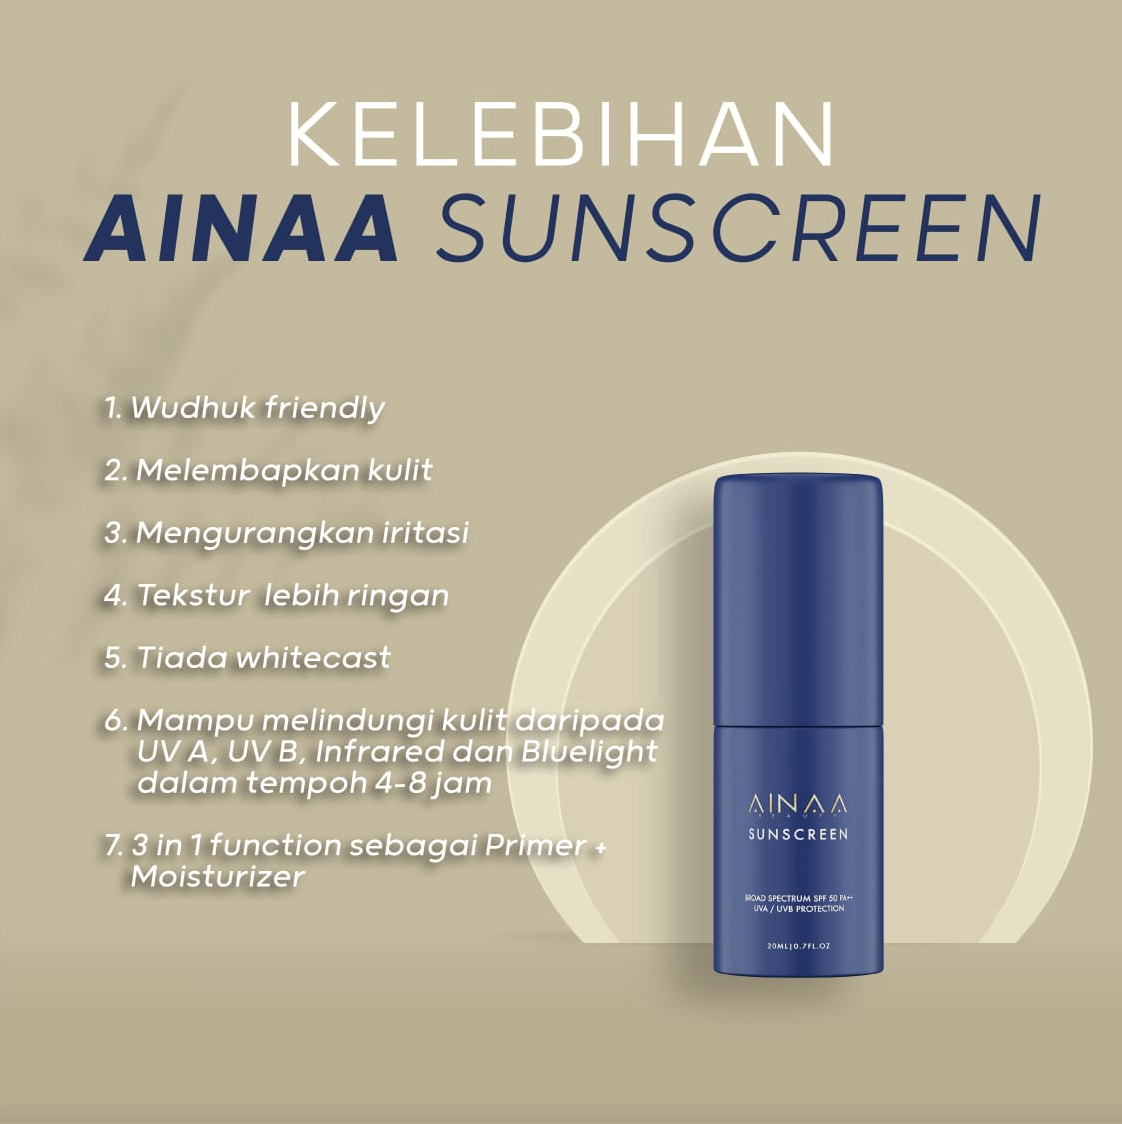 Ainaa Beauty, Sunscreen, SPF50 PA ++ 20ml